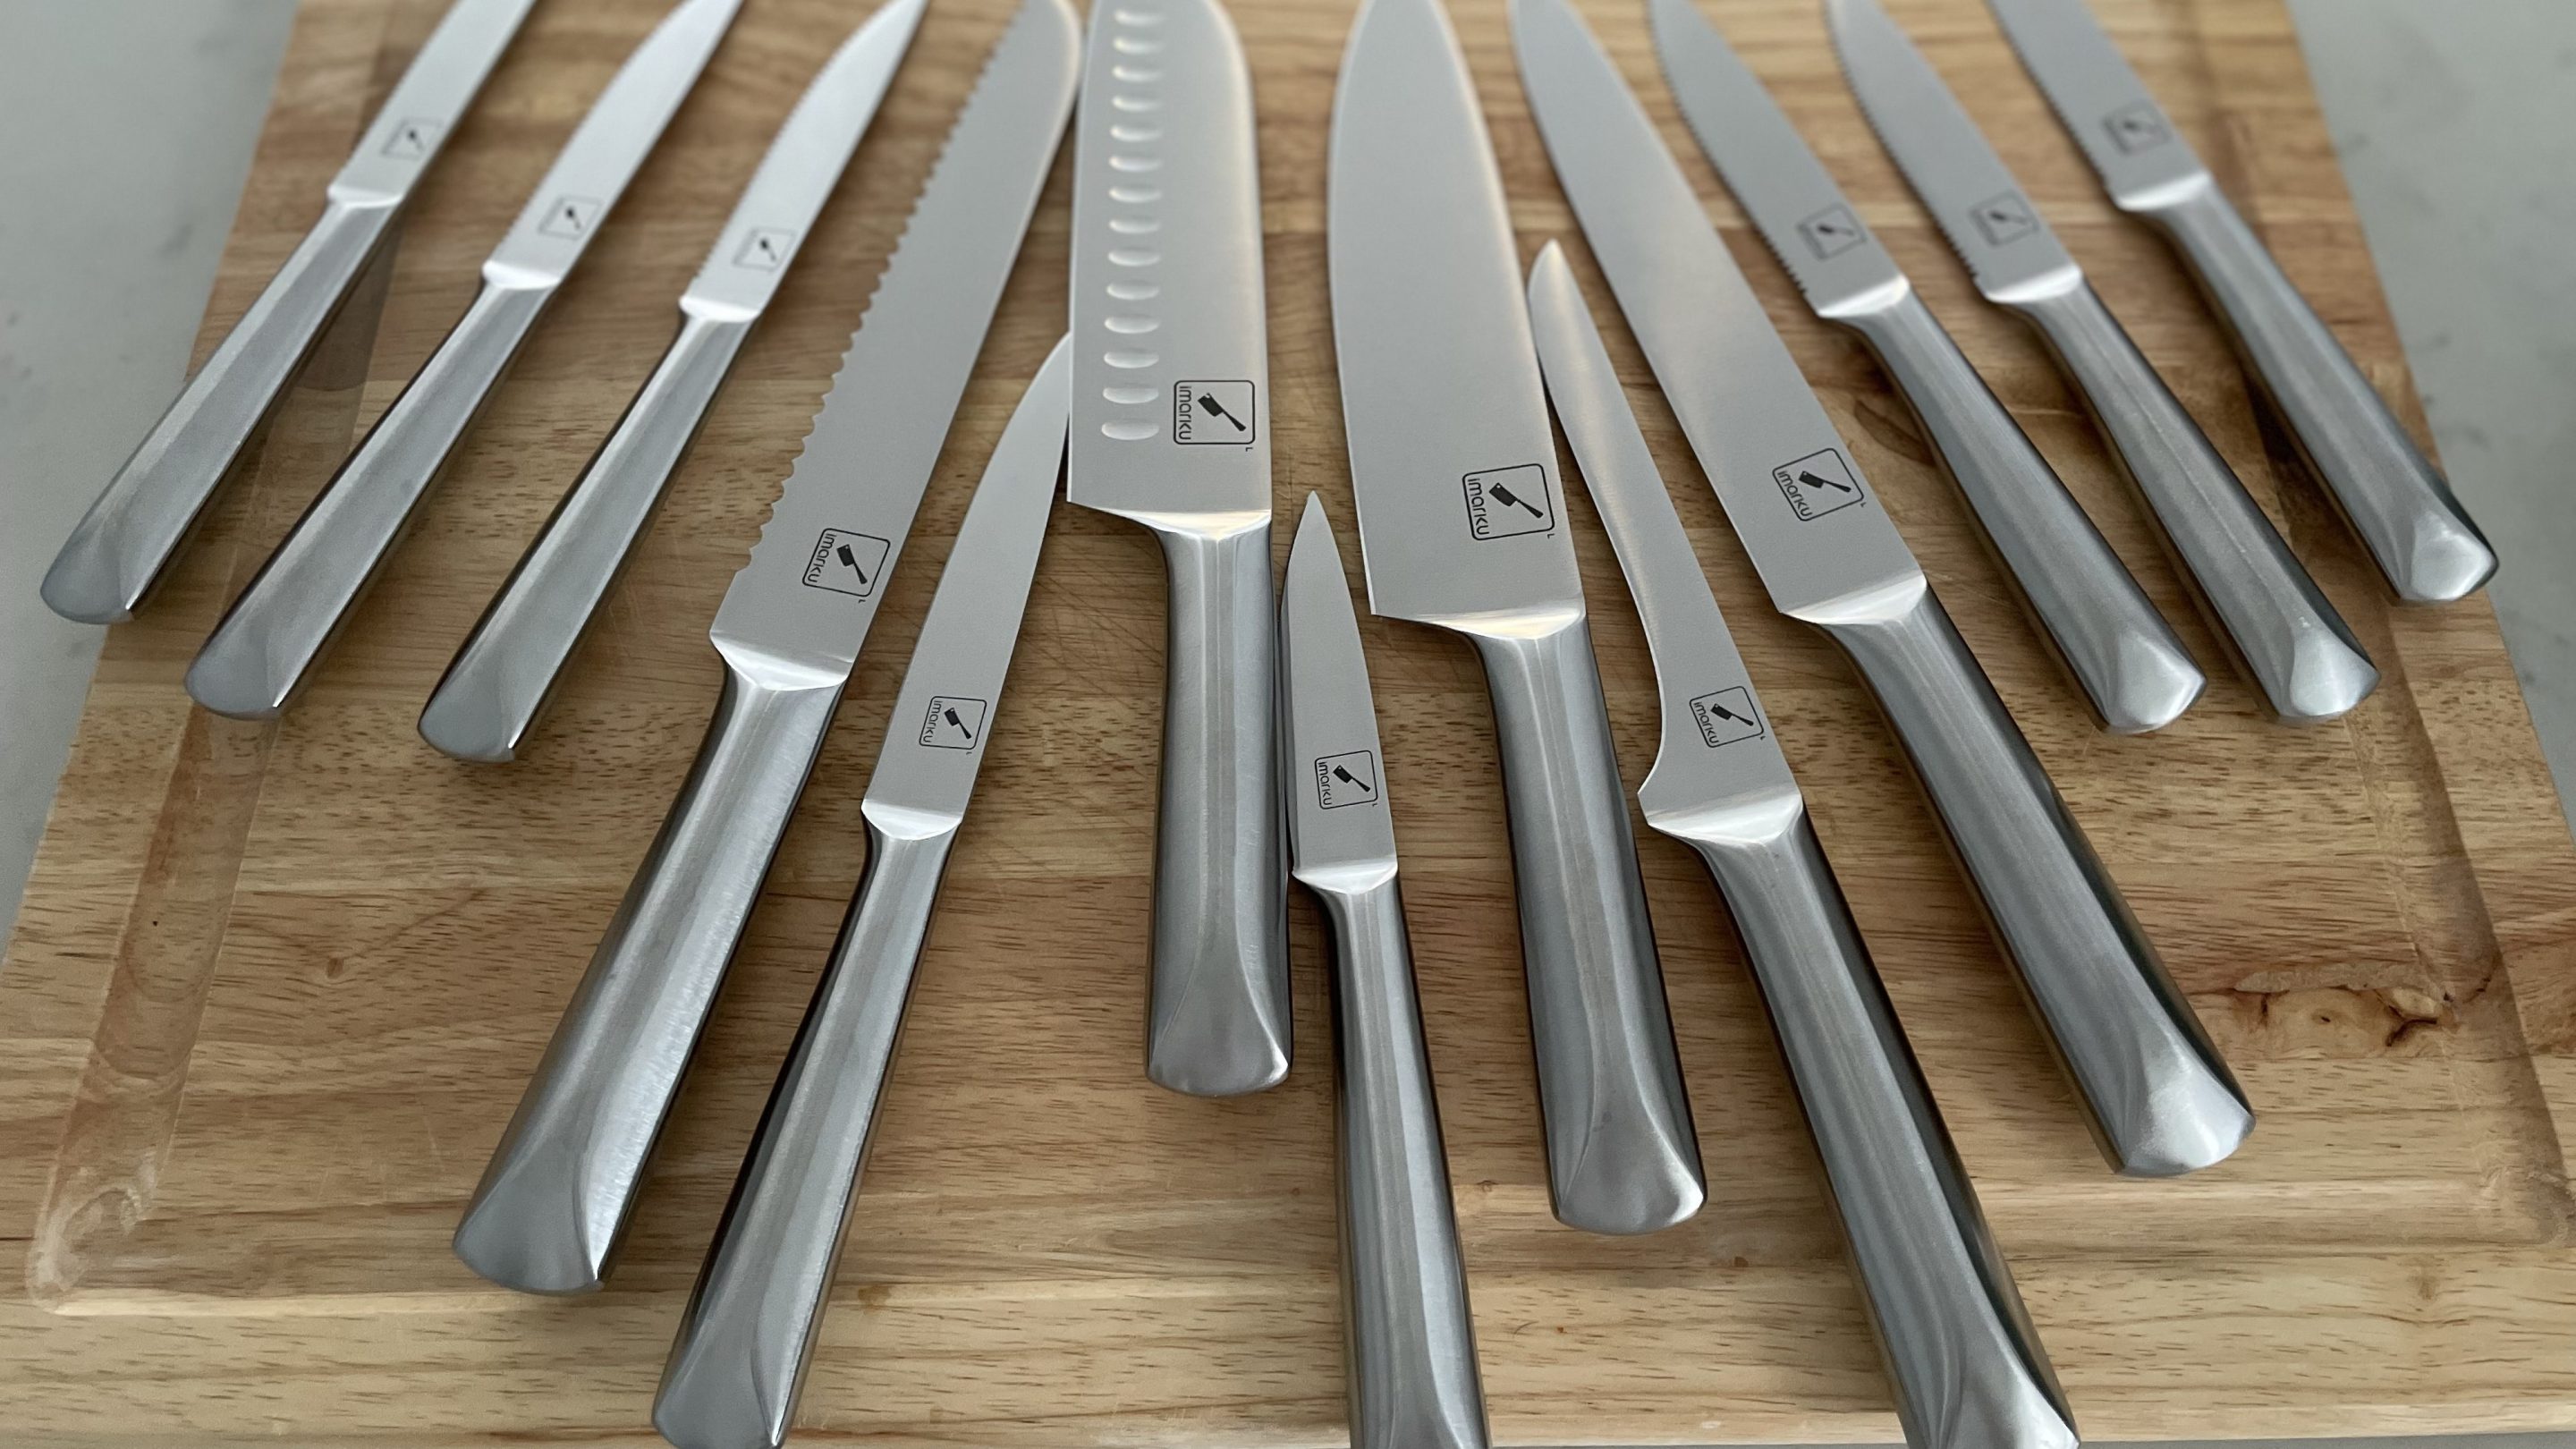 The knives of the Imarku 16-piece knife set.